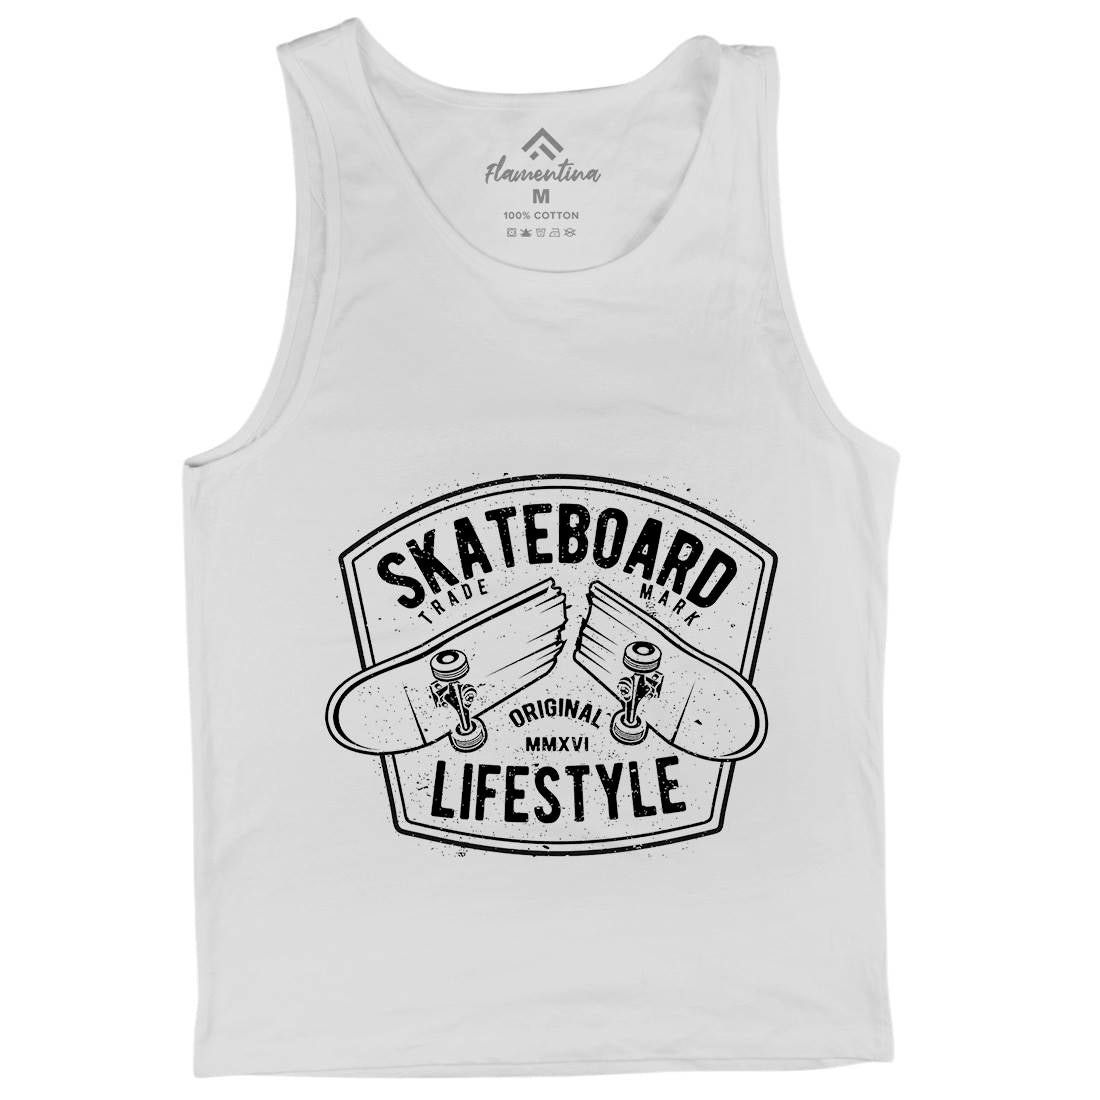 Skateboard Lifestyle Mens Tank Top Vest Skate A145